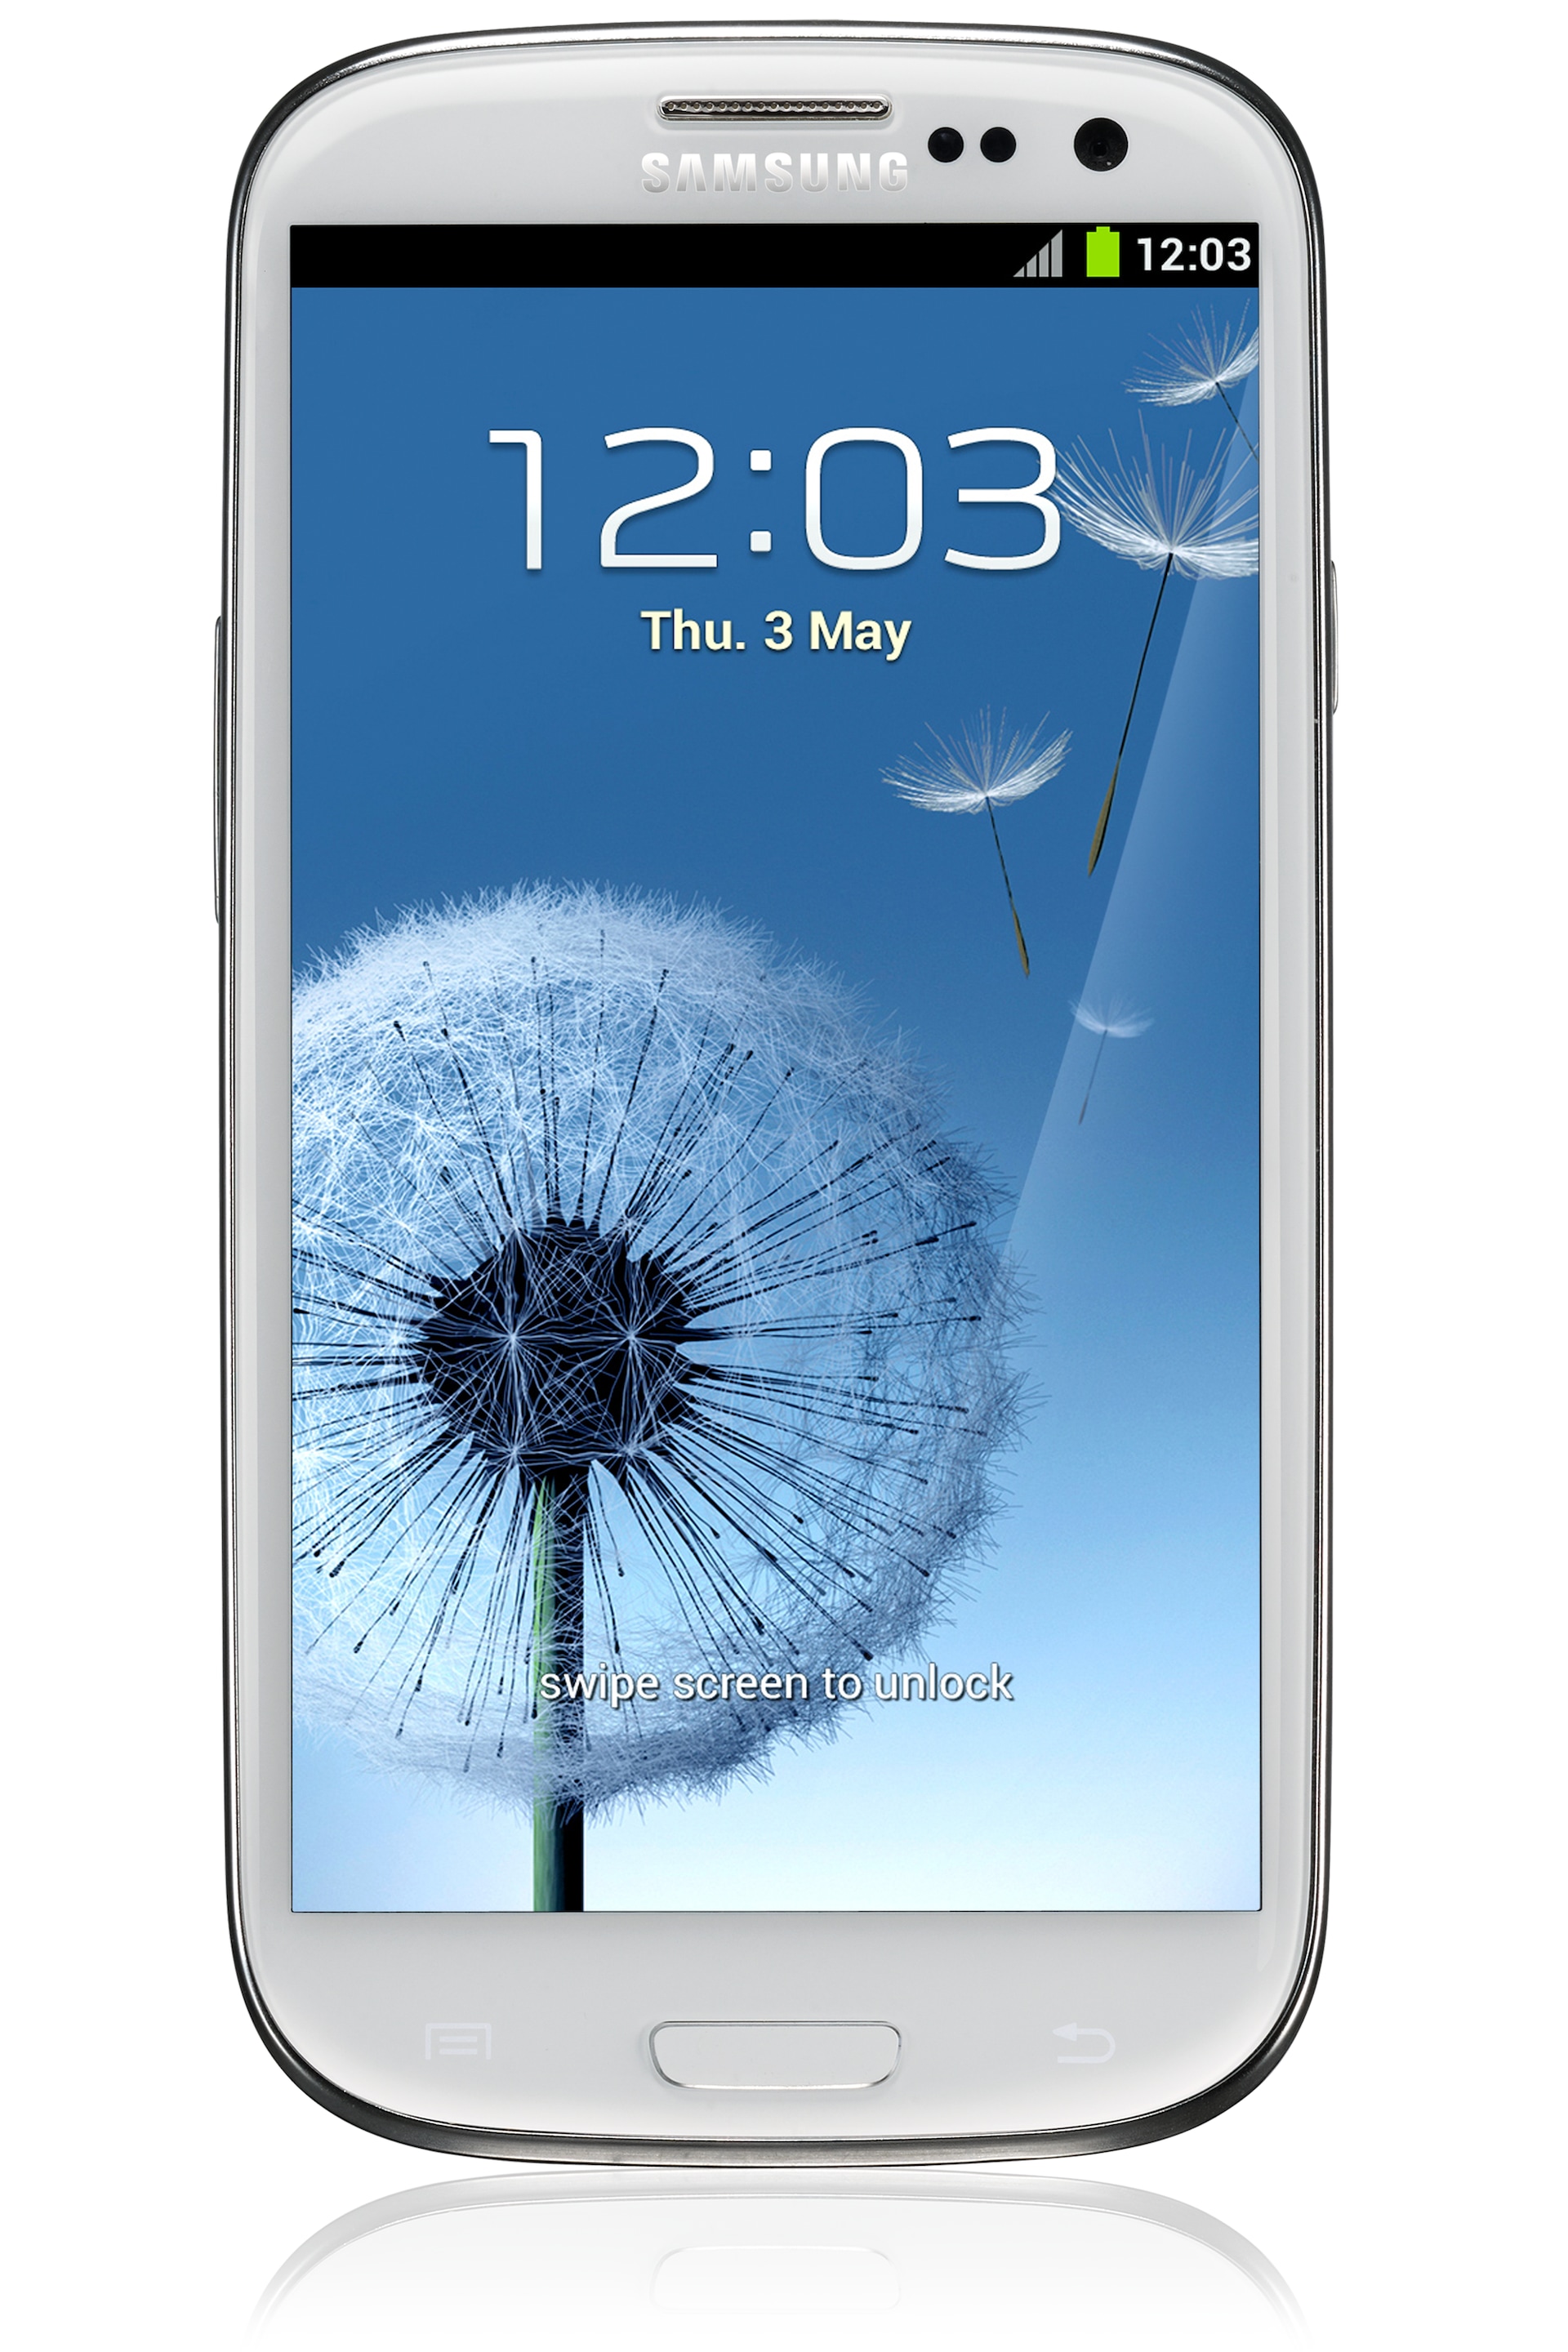 Samsung Galaxy S III (S3) 3G WiFi NFC Camera Phone | Samsung IE